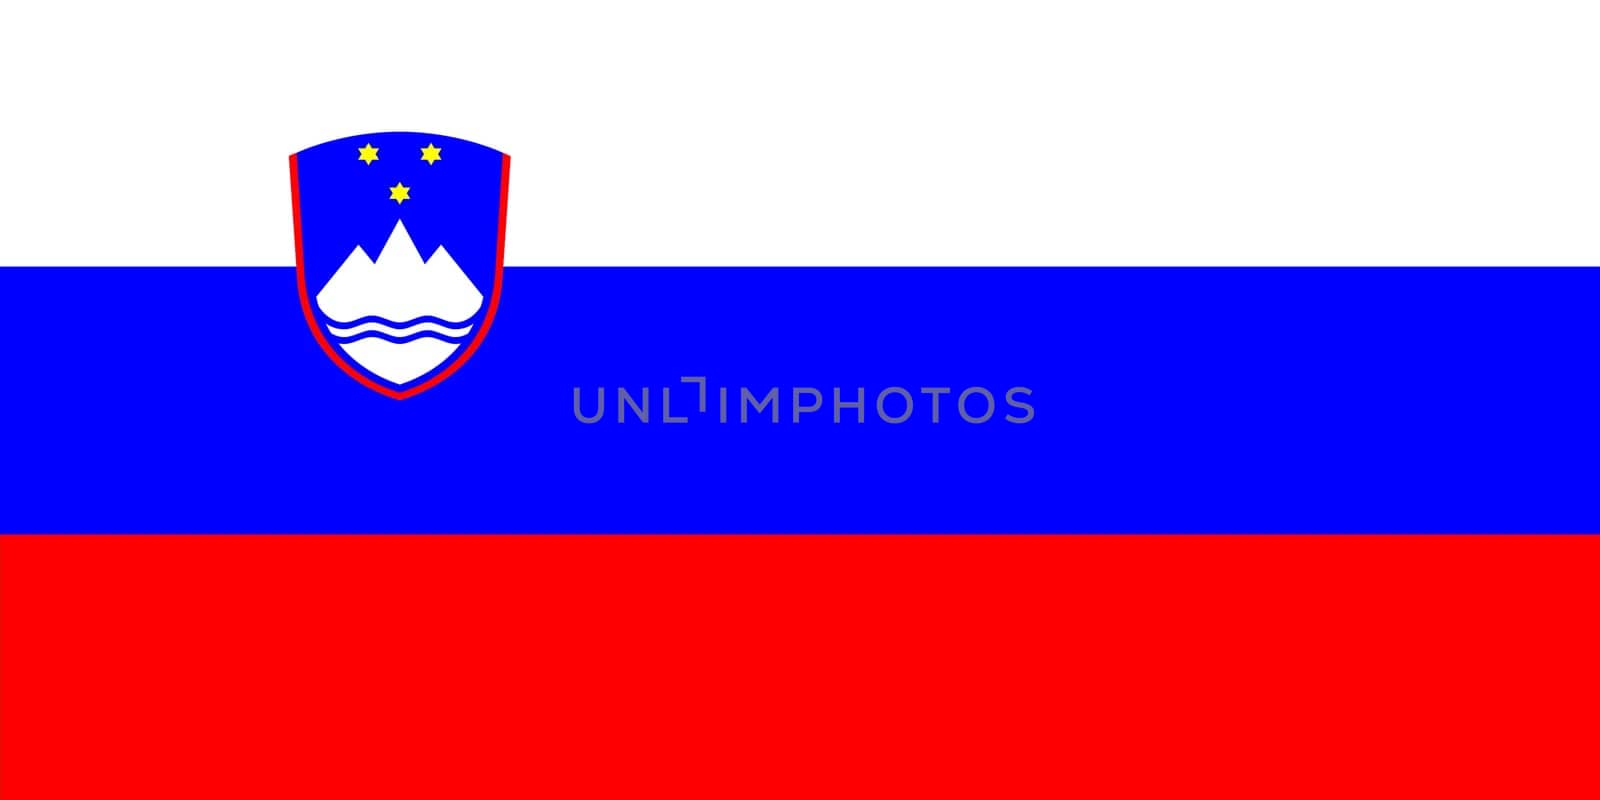 A Slovenia flag background illustration red blue white Mount Triglav and Adriatic Sea